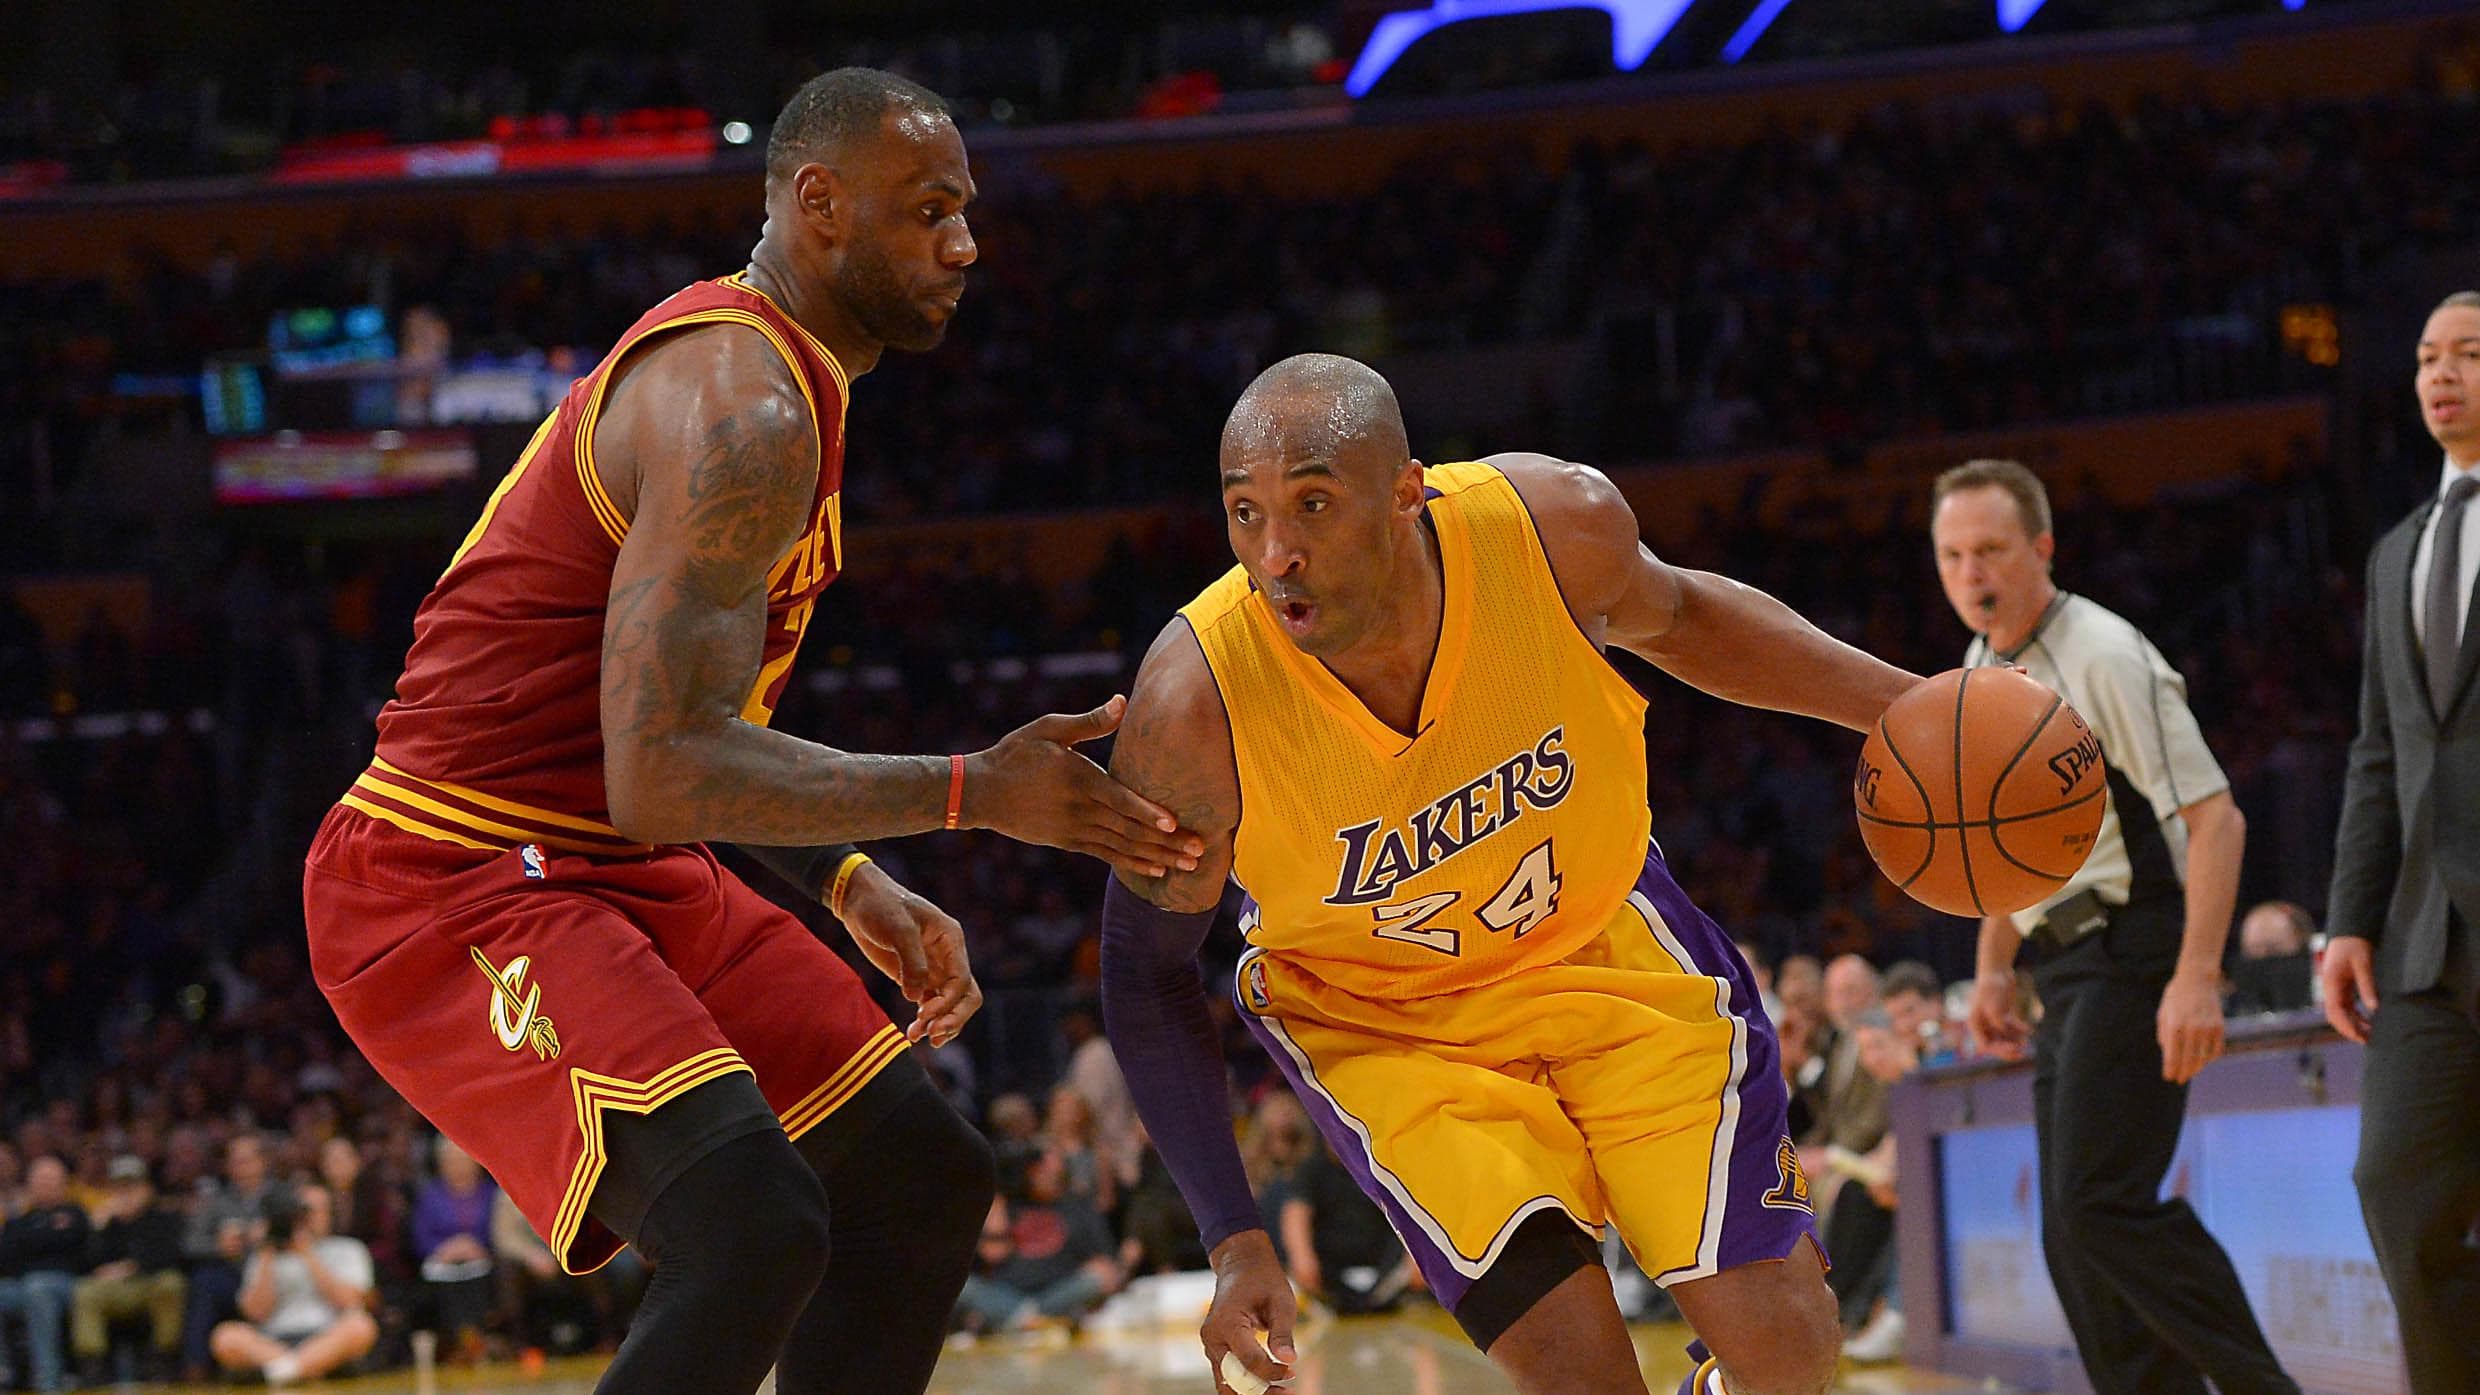 Lakers News: Former LA Coach Breaks Down Leadership Differences Between LeBron, Kobe